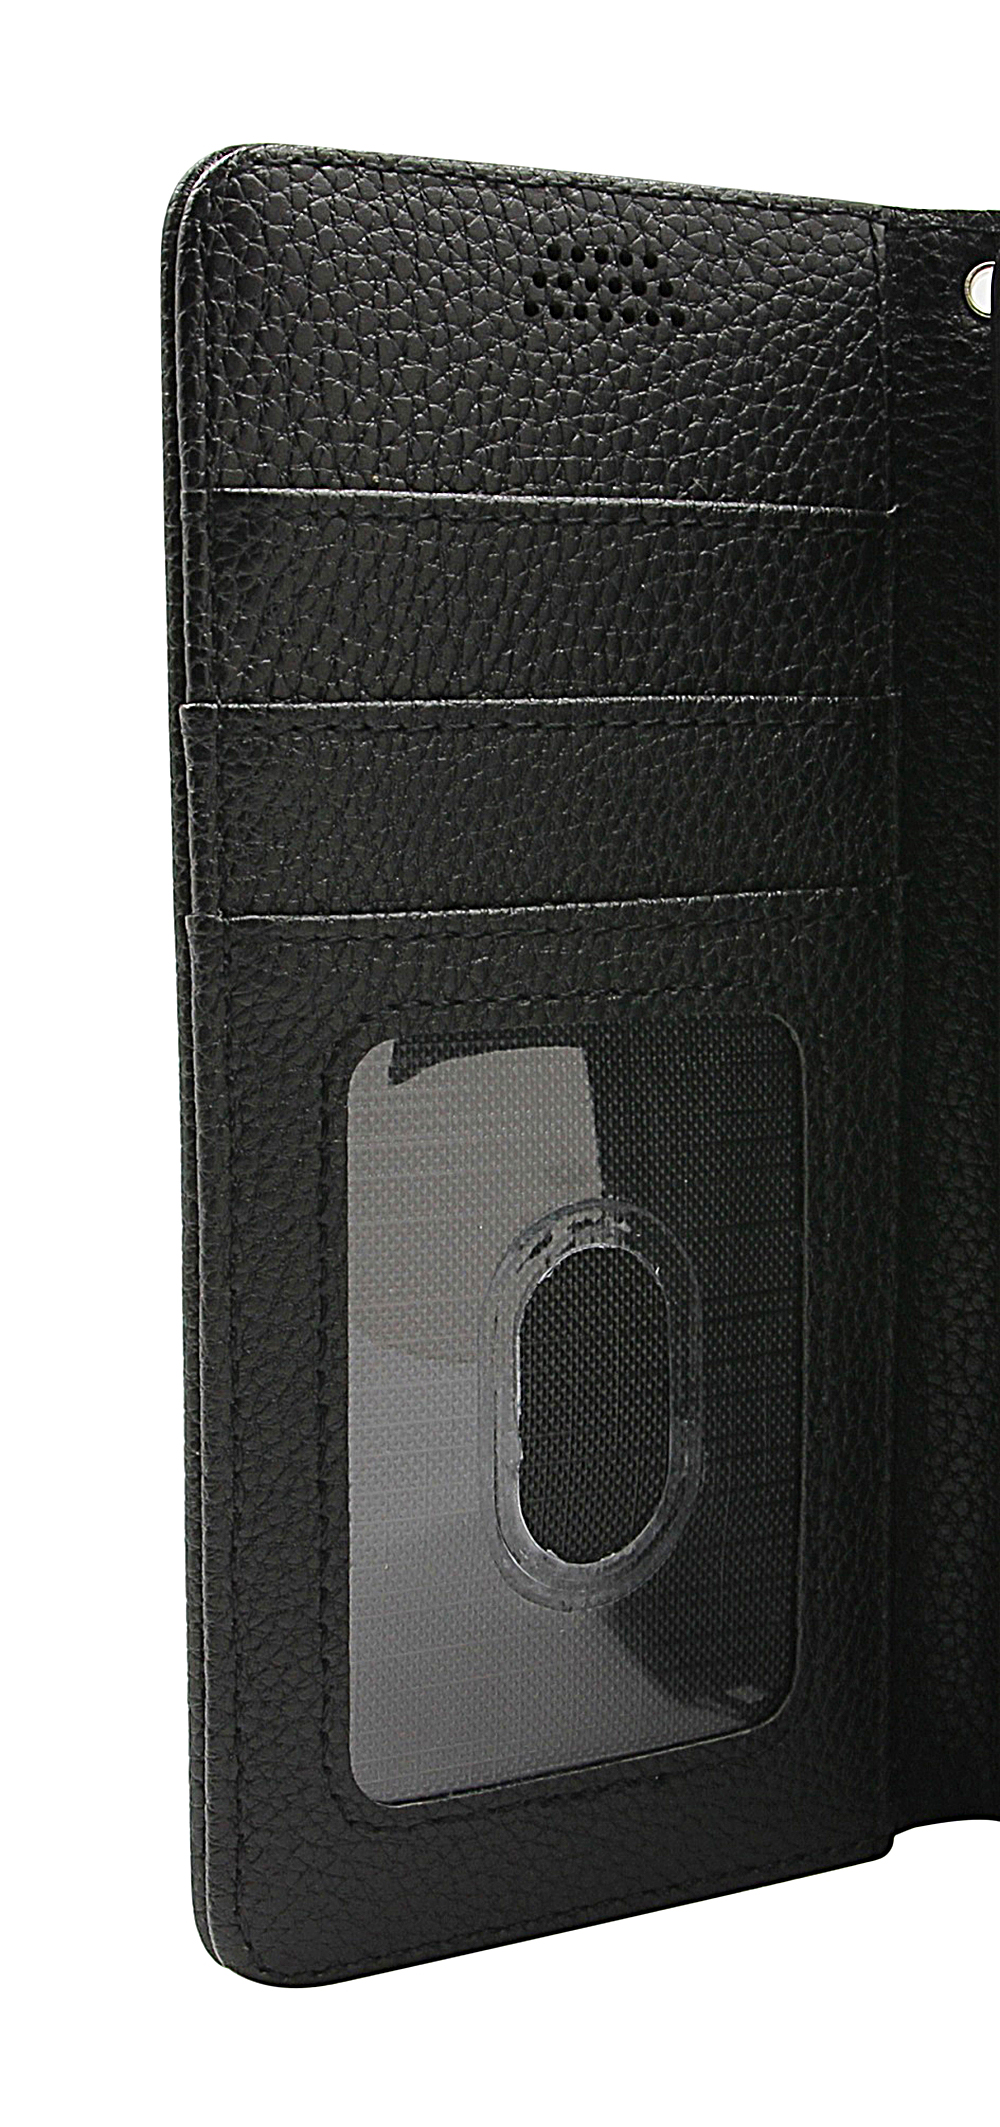 New Standcase Wallet Nokia 7 Plus